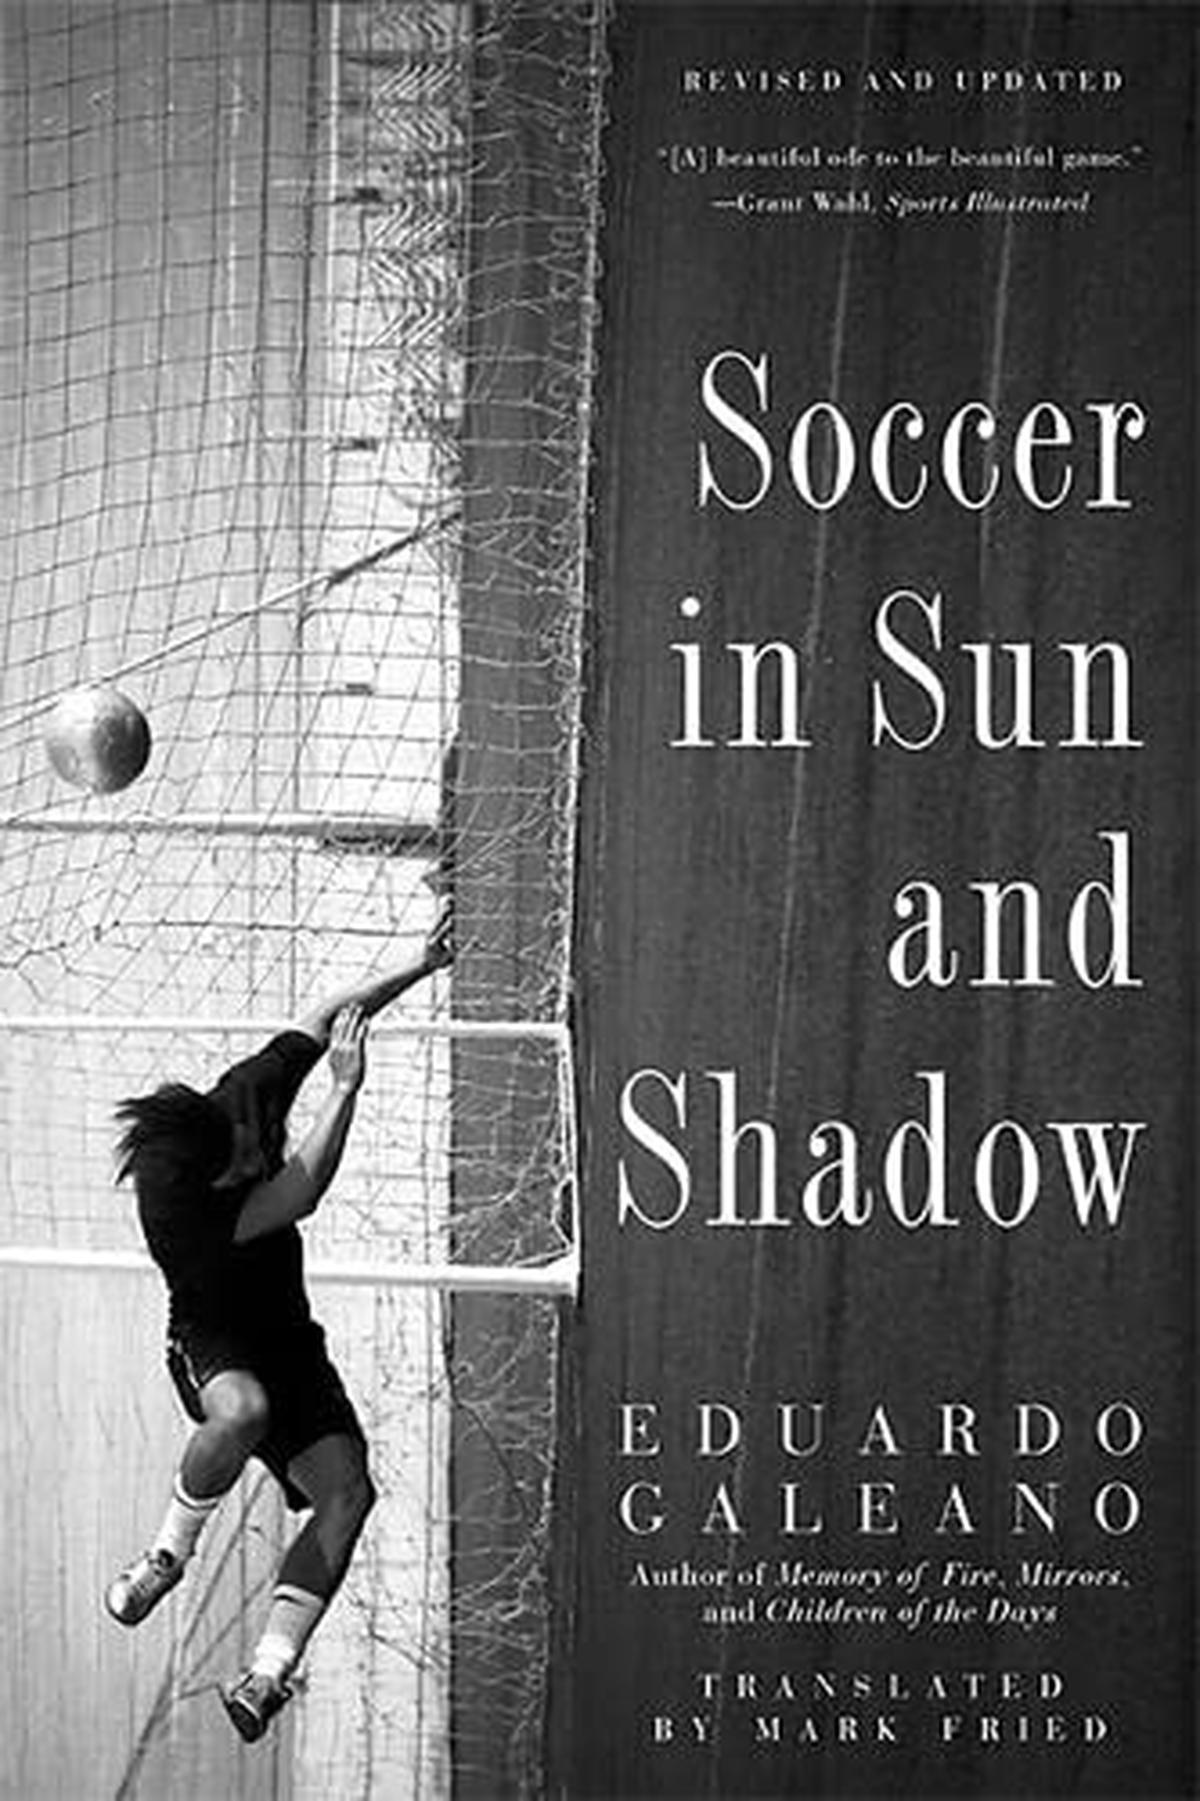 Eduardo Galeanos 'Football in sun and shade'.